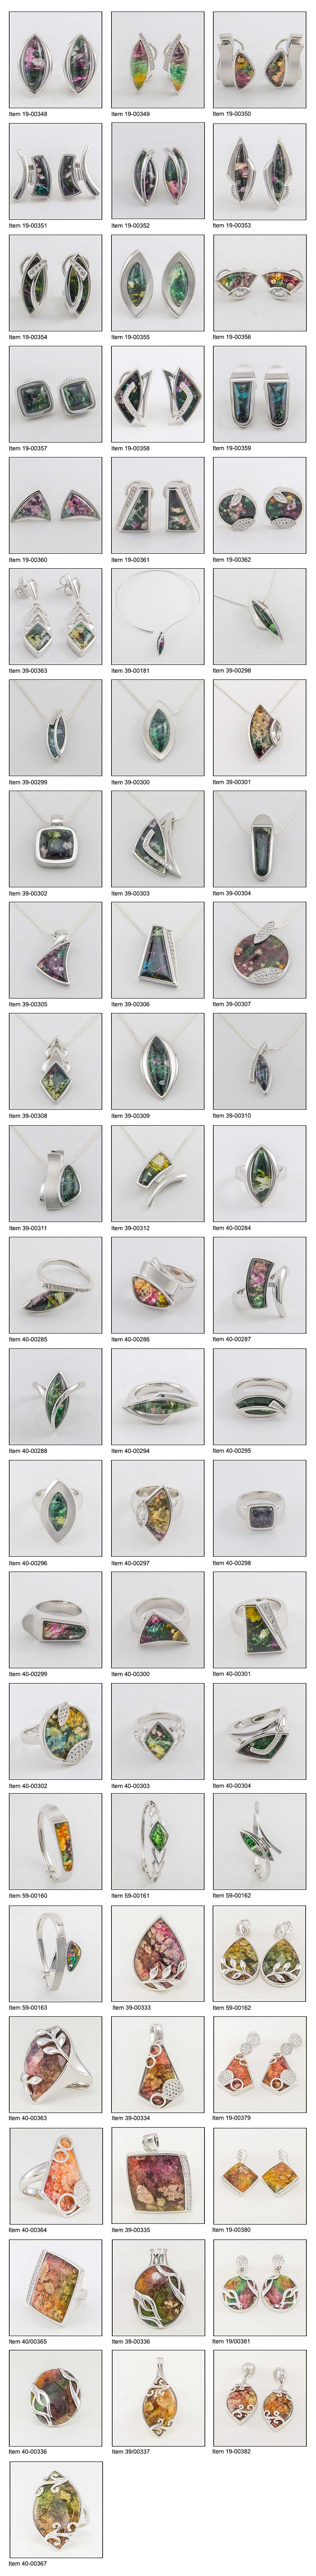 consilio jewelry picture list